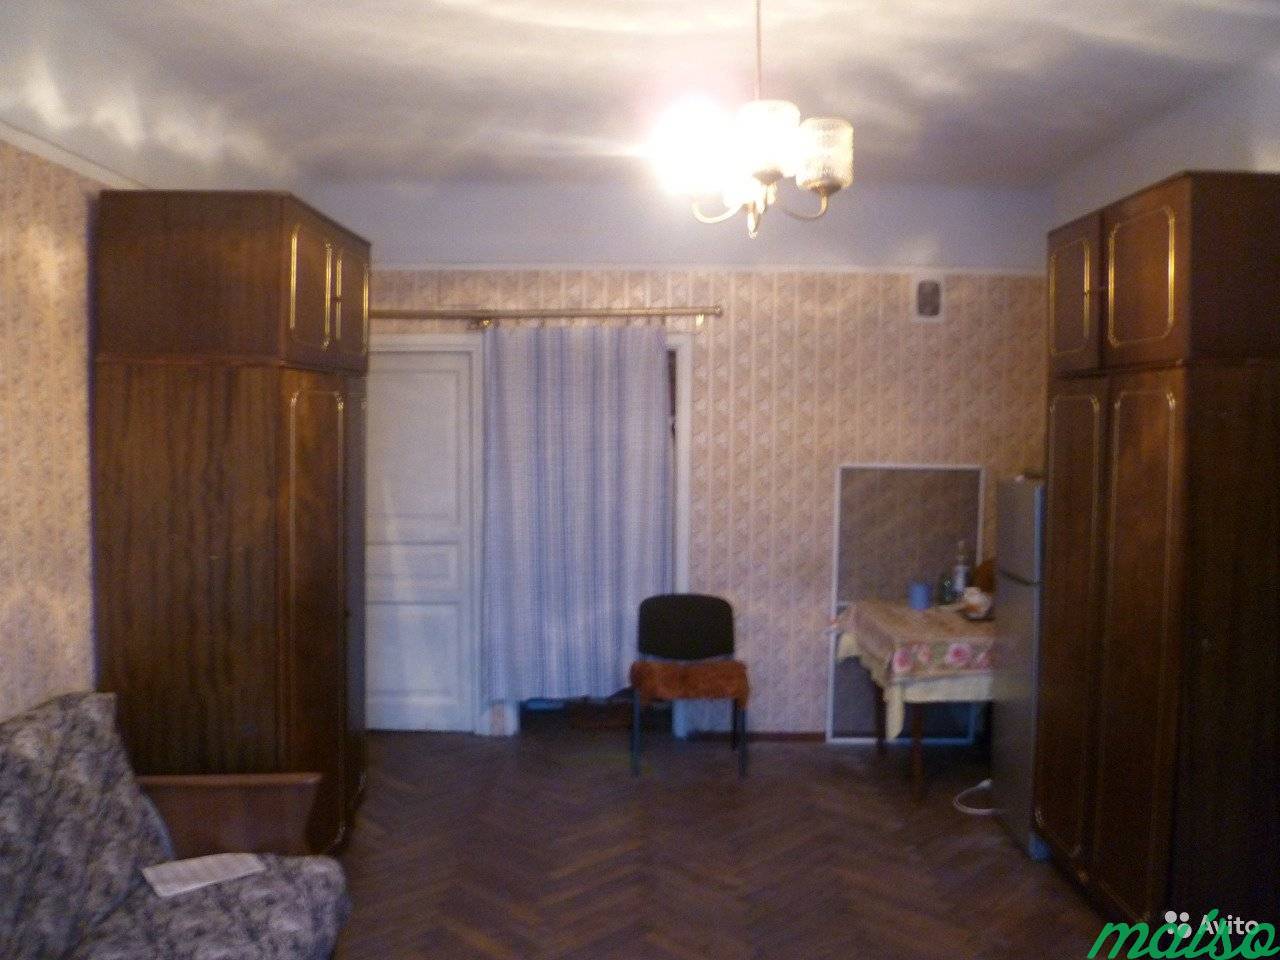 Комната 22 м² в 3-к, 2/6 эт. в Санкт-Петербурге. Фото 2